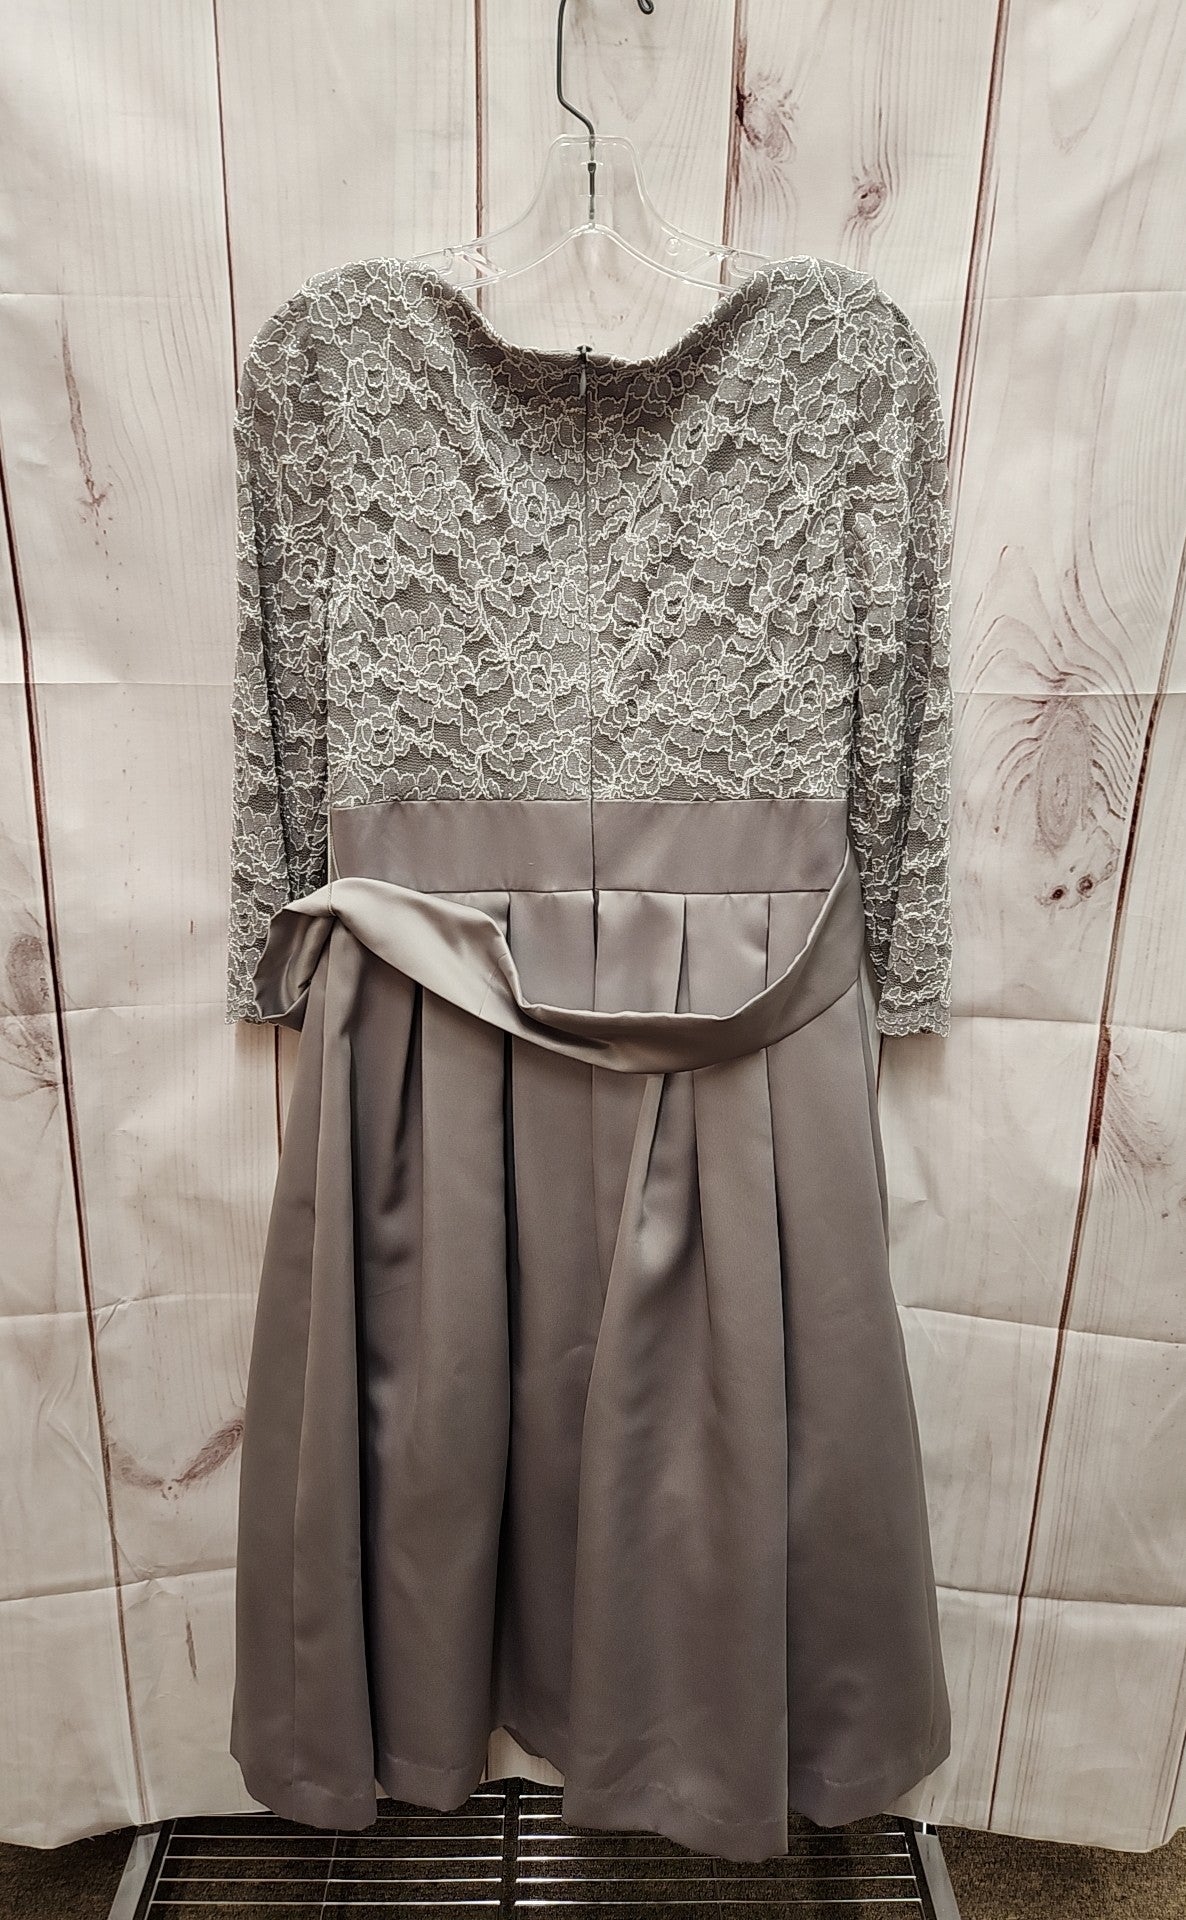 Jessica Howard Women's Size 6 Gray Dress